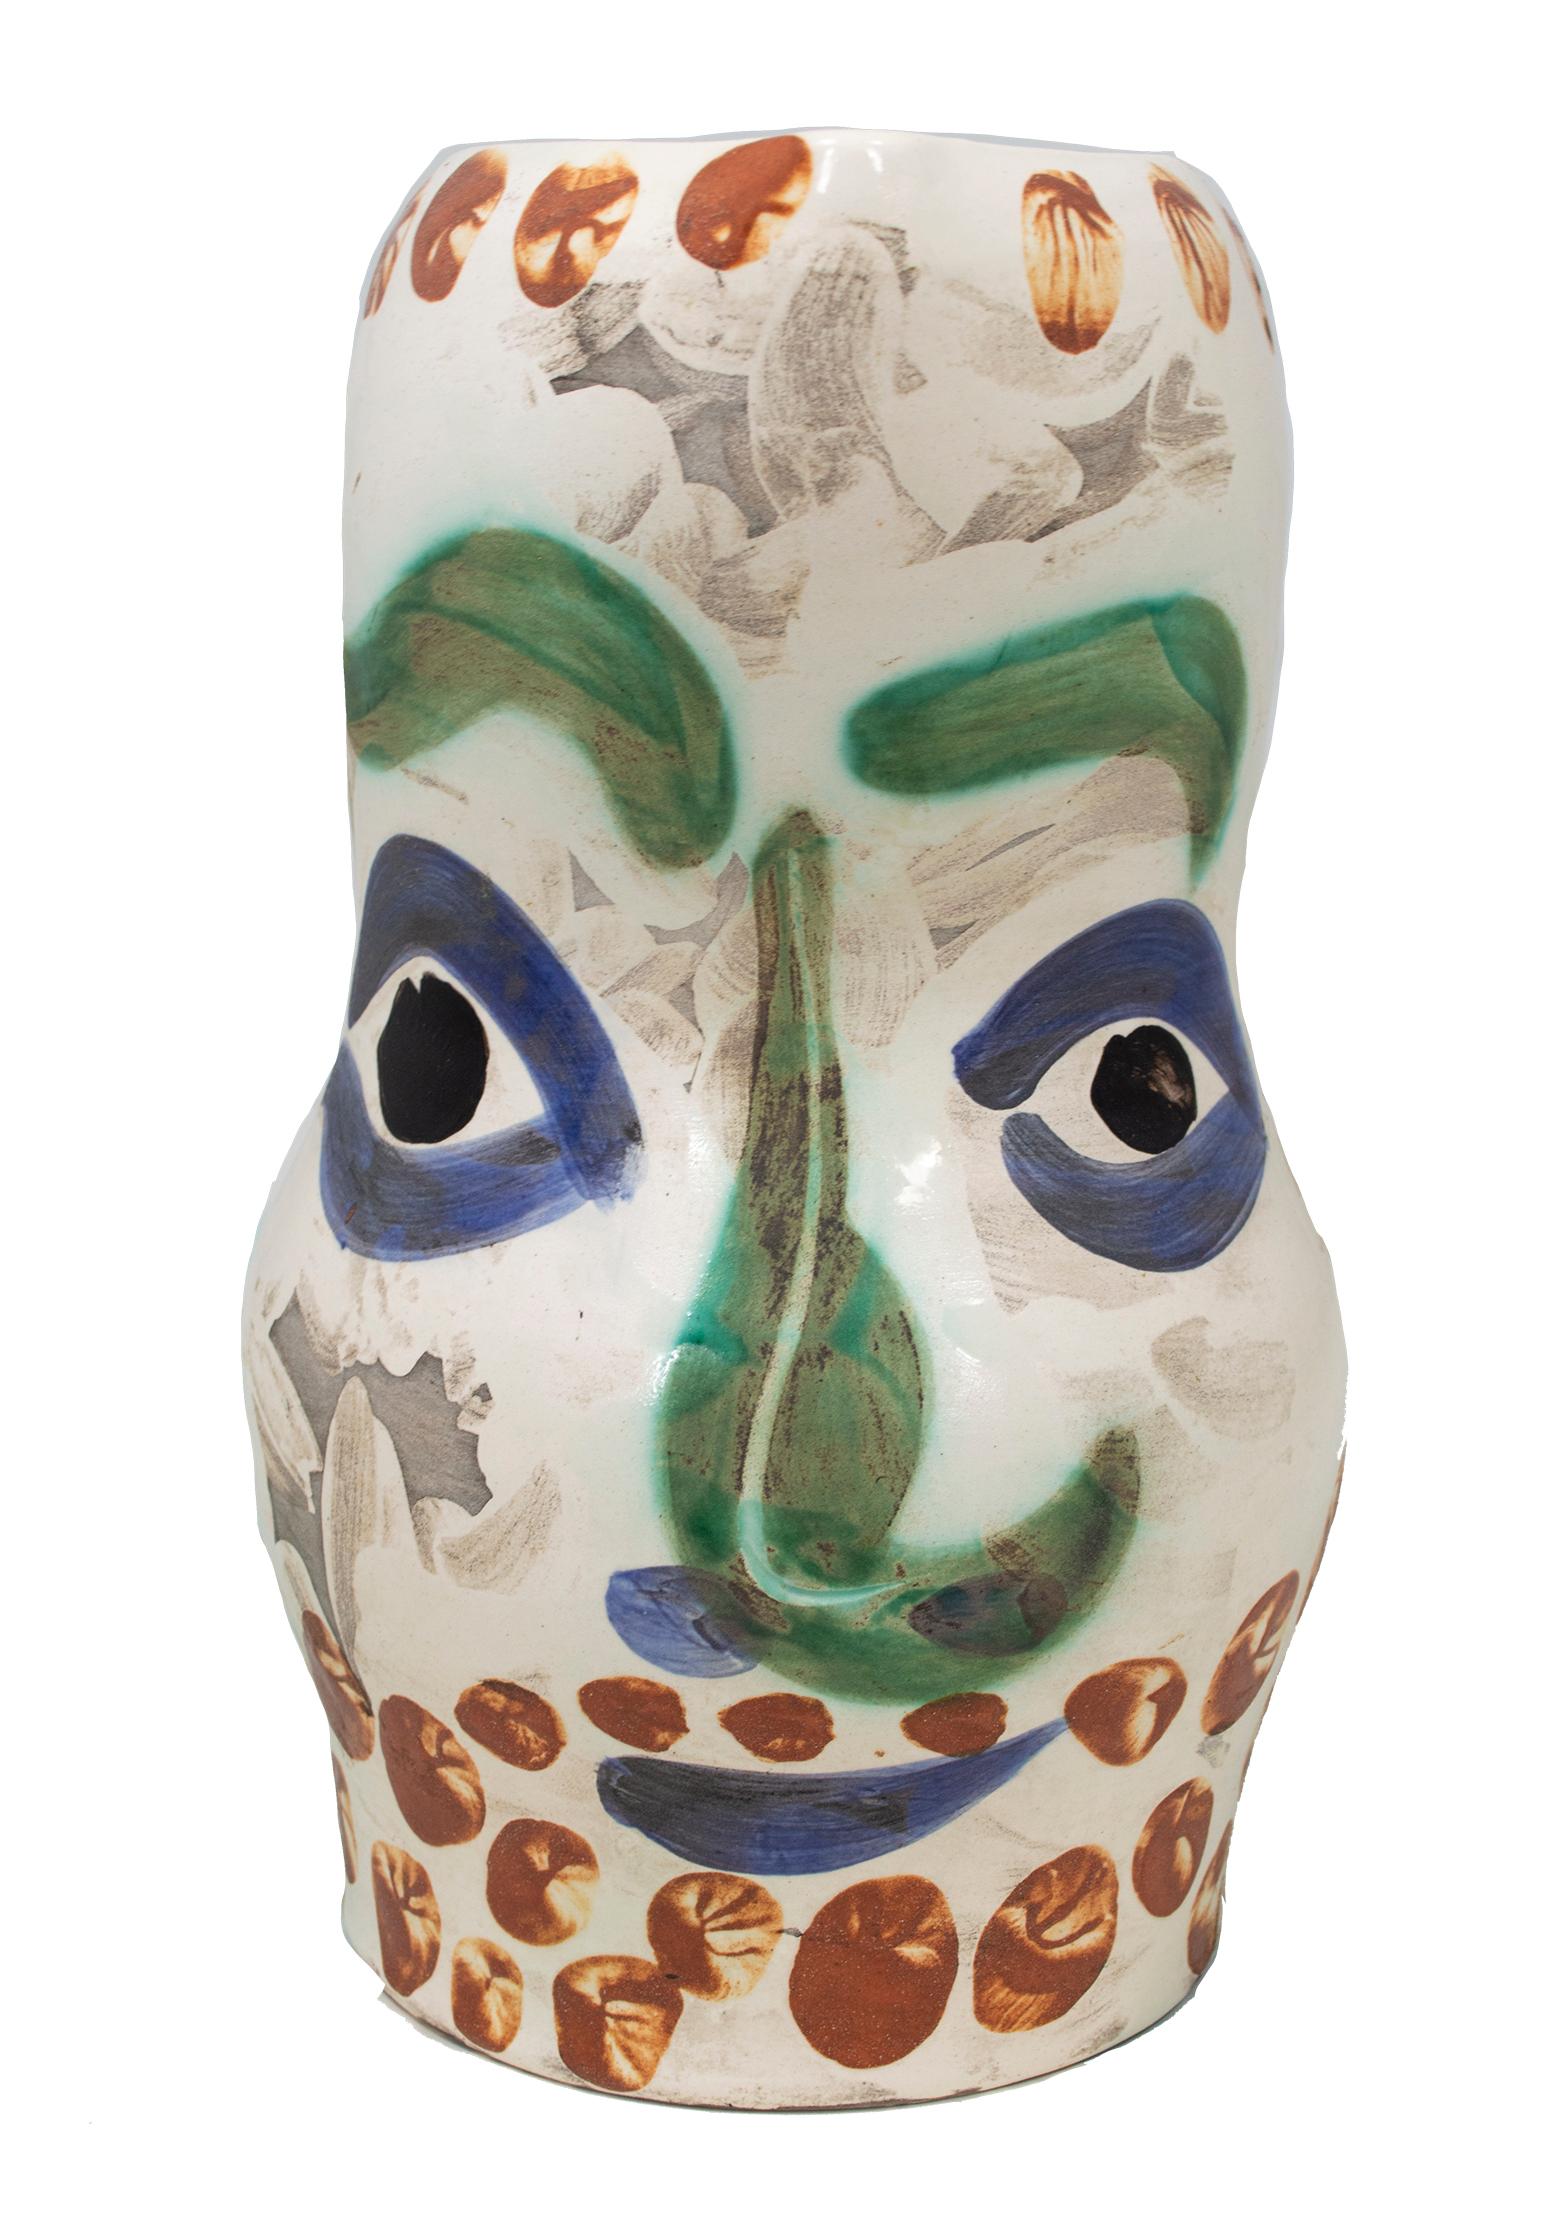 'Face with Points (Visage aux points)' Madoura ceramic pitcher, Edition Picasso - Sculpture by Pablo Picasso